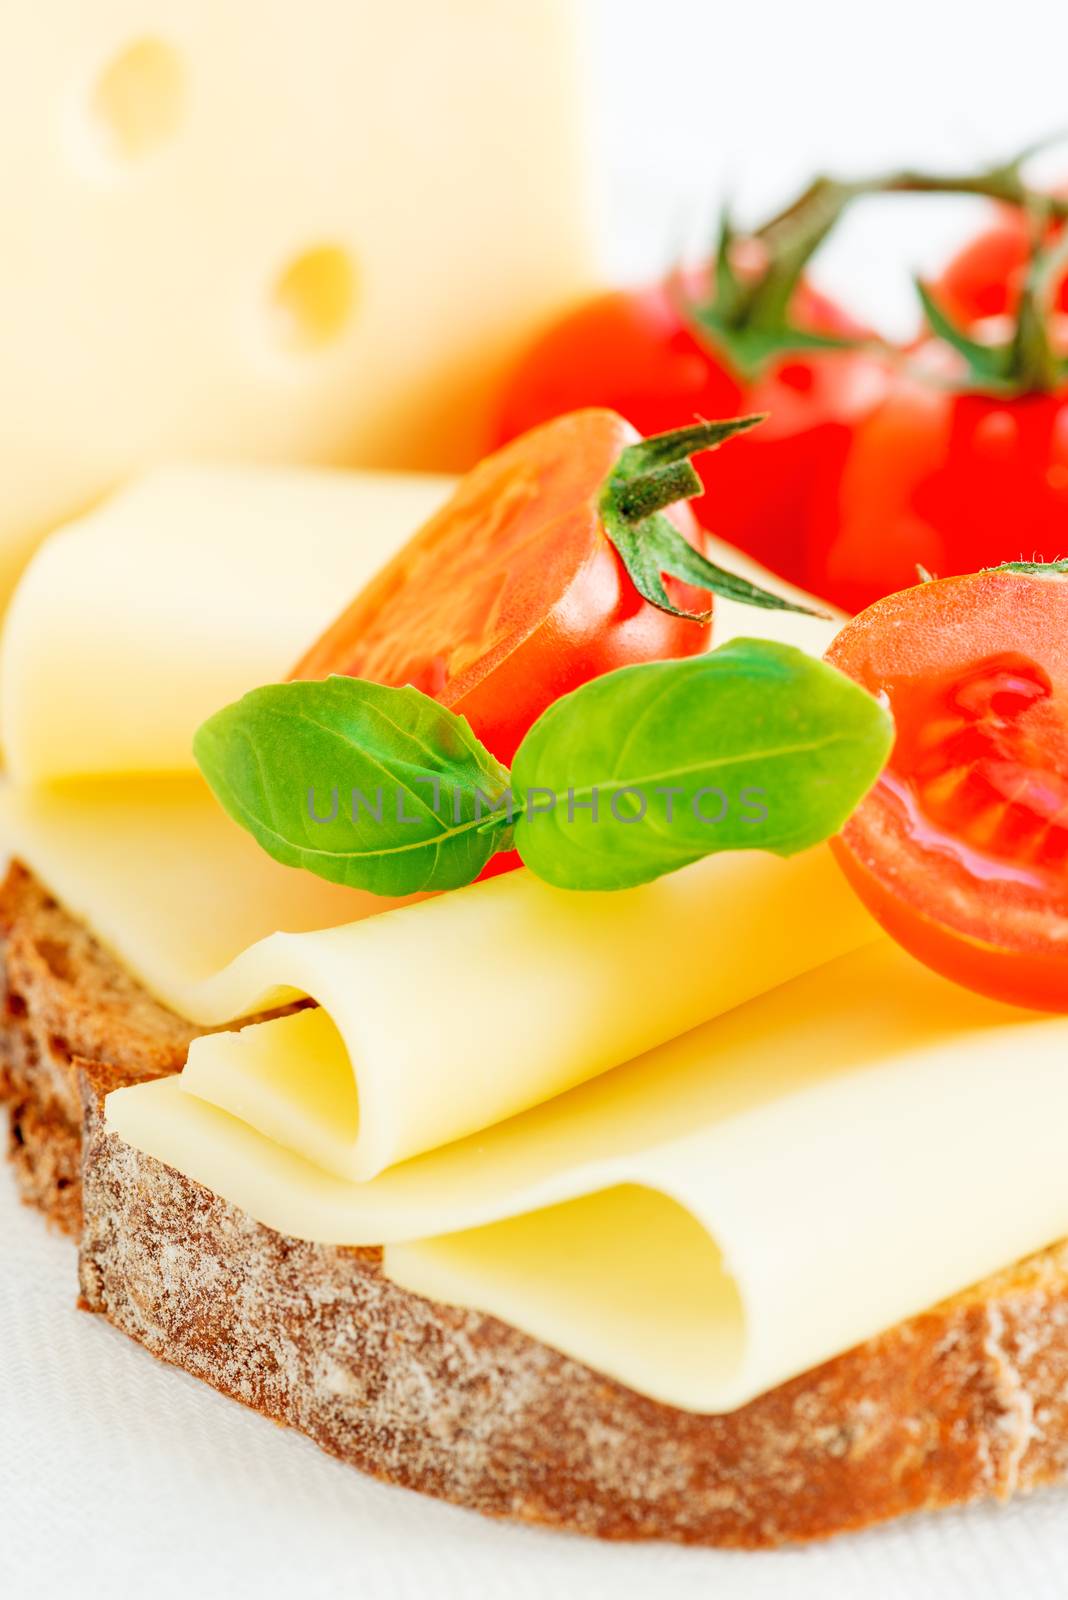 Cheese sandwich with fresh tomato and basil close up by Nanisimova